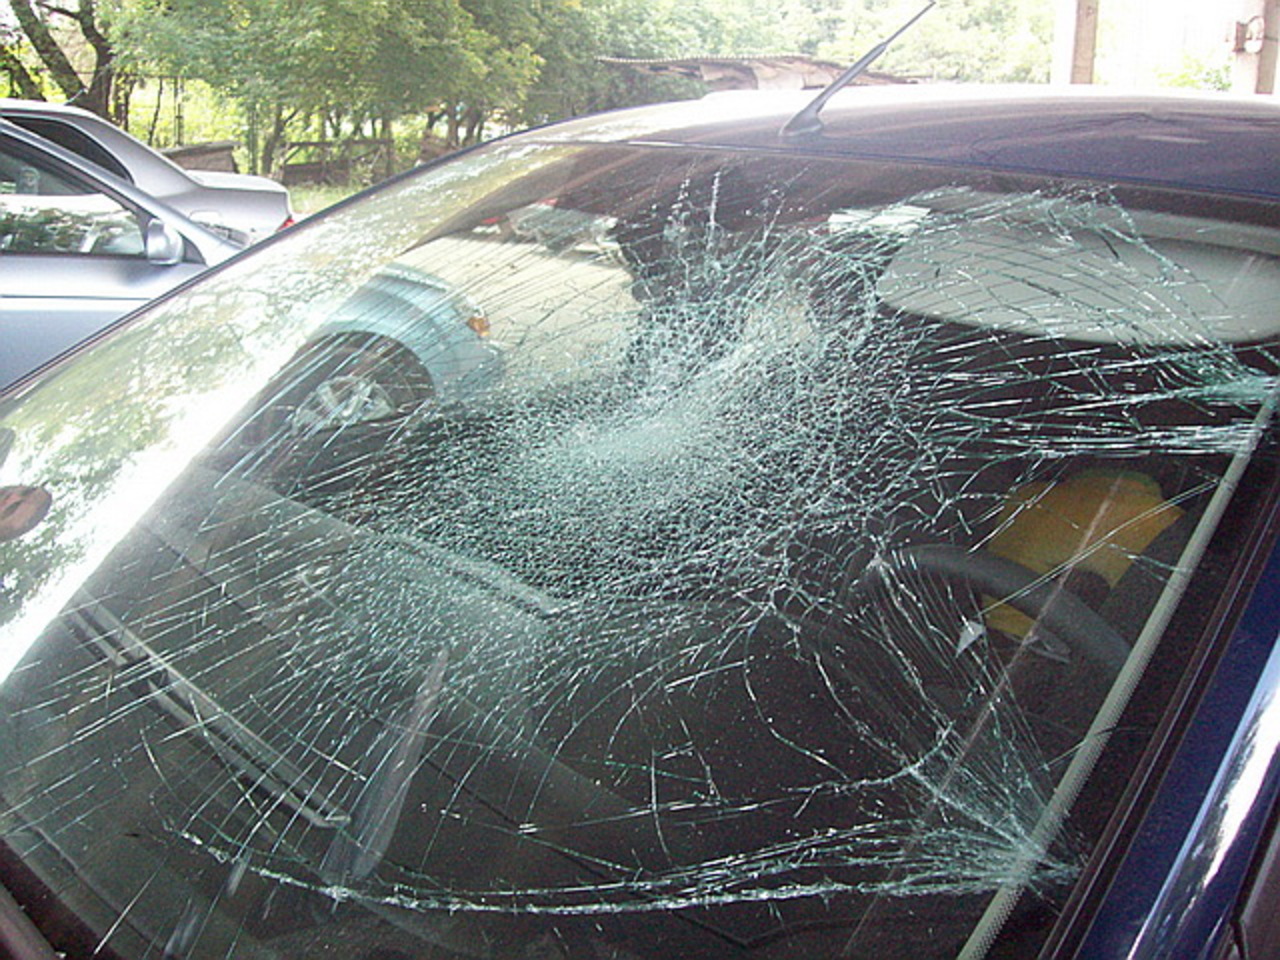 Разбитое лобовое стекло машины. Разбитое стекло автомобиля. Битое автомобильное стекло. Разбитое лобовое стекло. Машина с разбитым стеклом.